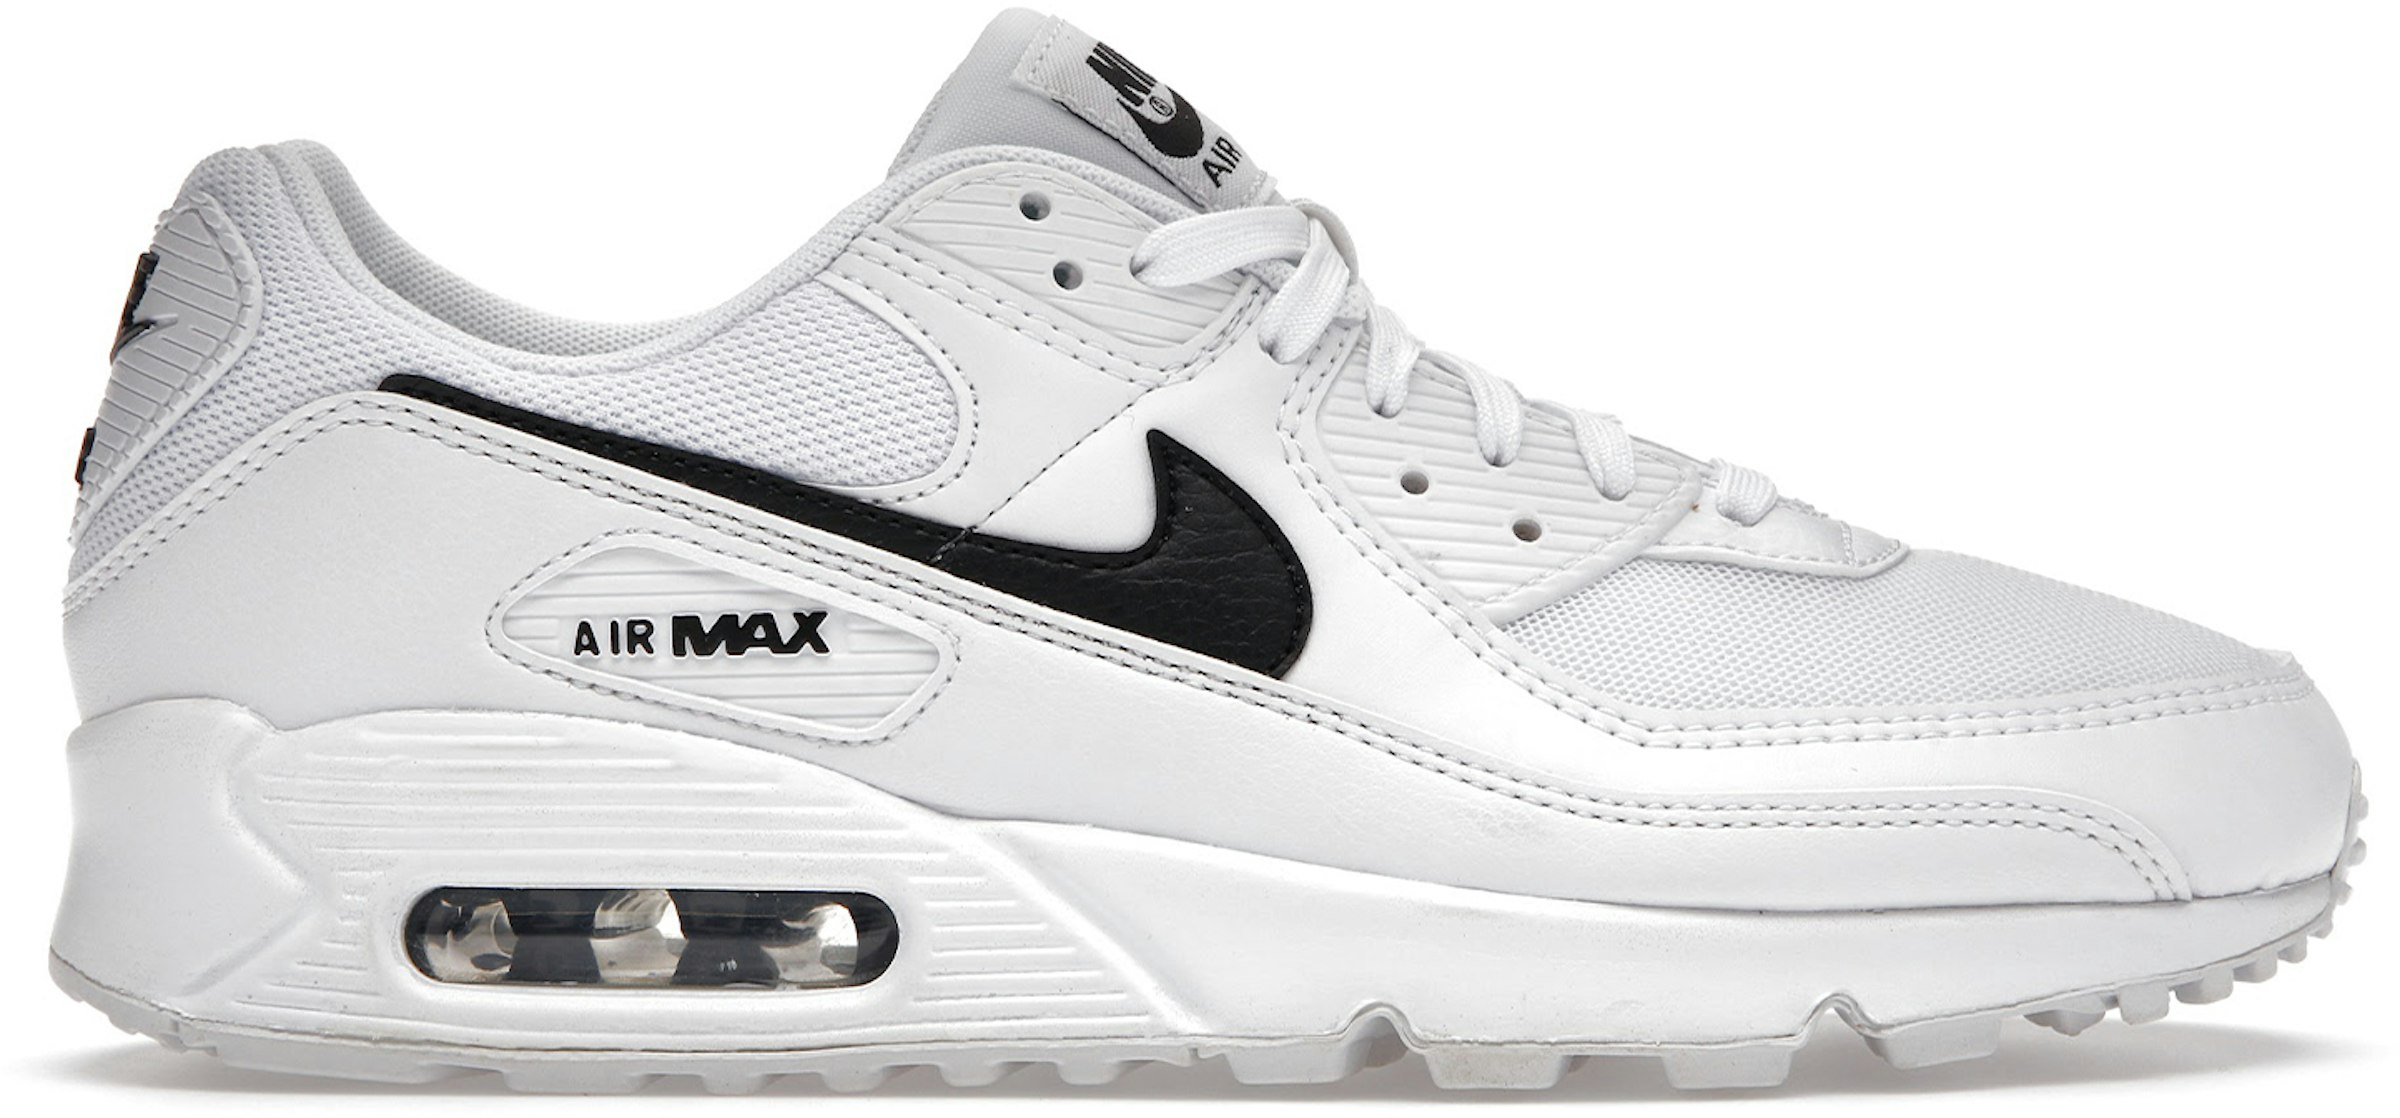 Verheugen toeter maniac Nike Air Max 90 Next Nature White Black (Women's) - DH8010-101 - US